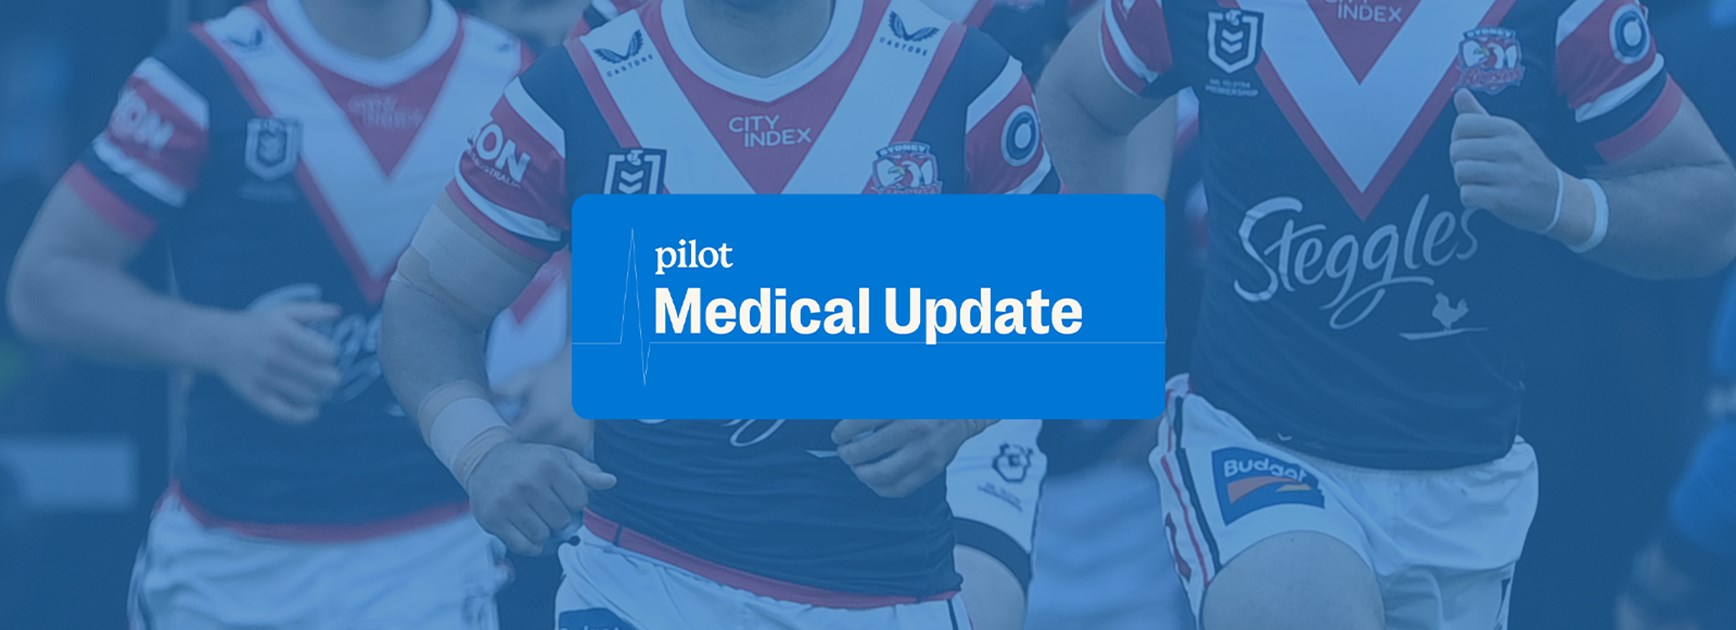 Pilot Medical Update: Round 2